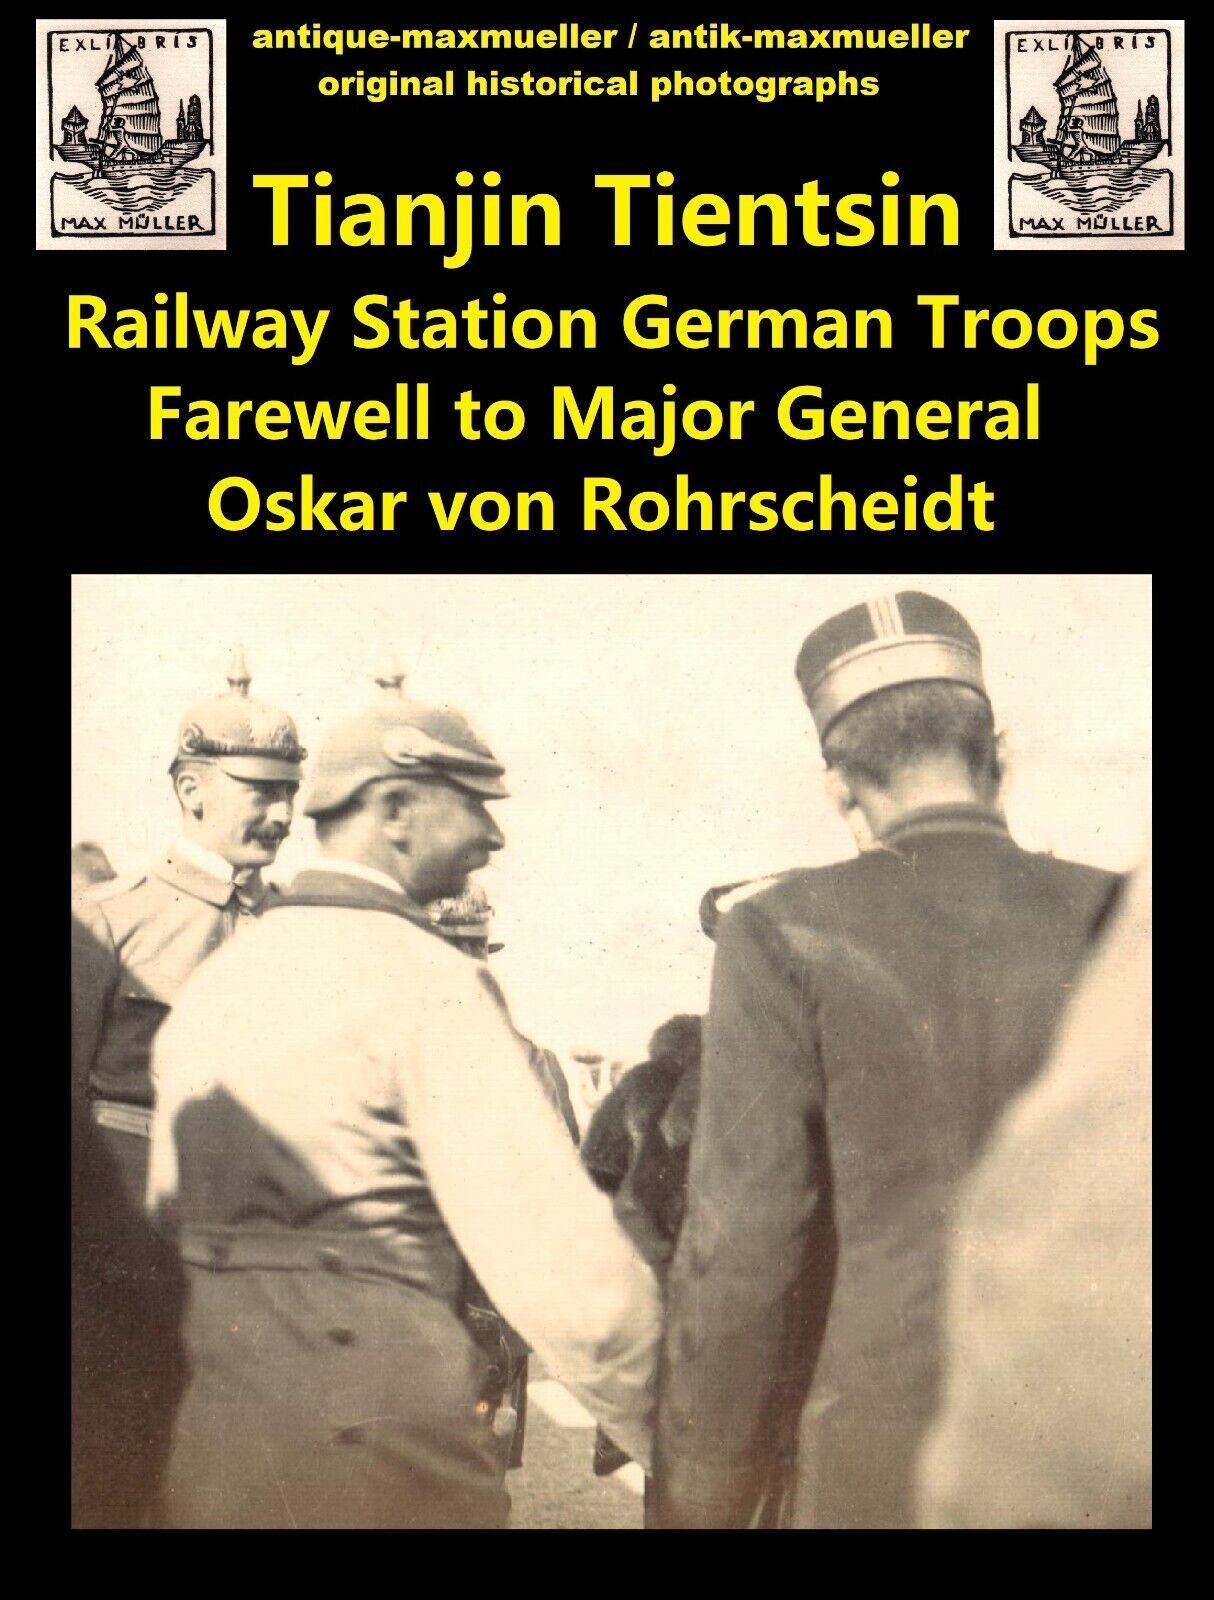 China Tianjin Railway Station Farewell German Major Rohrscheidt Oct 1903 5x orig